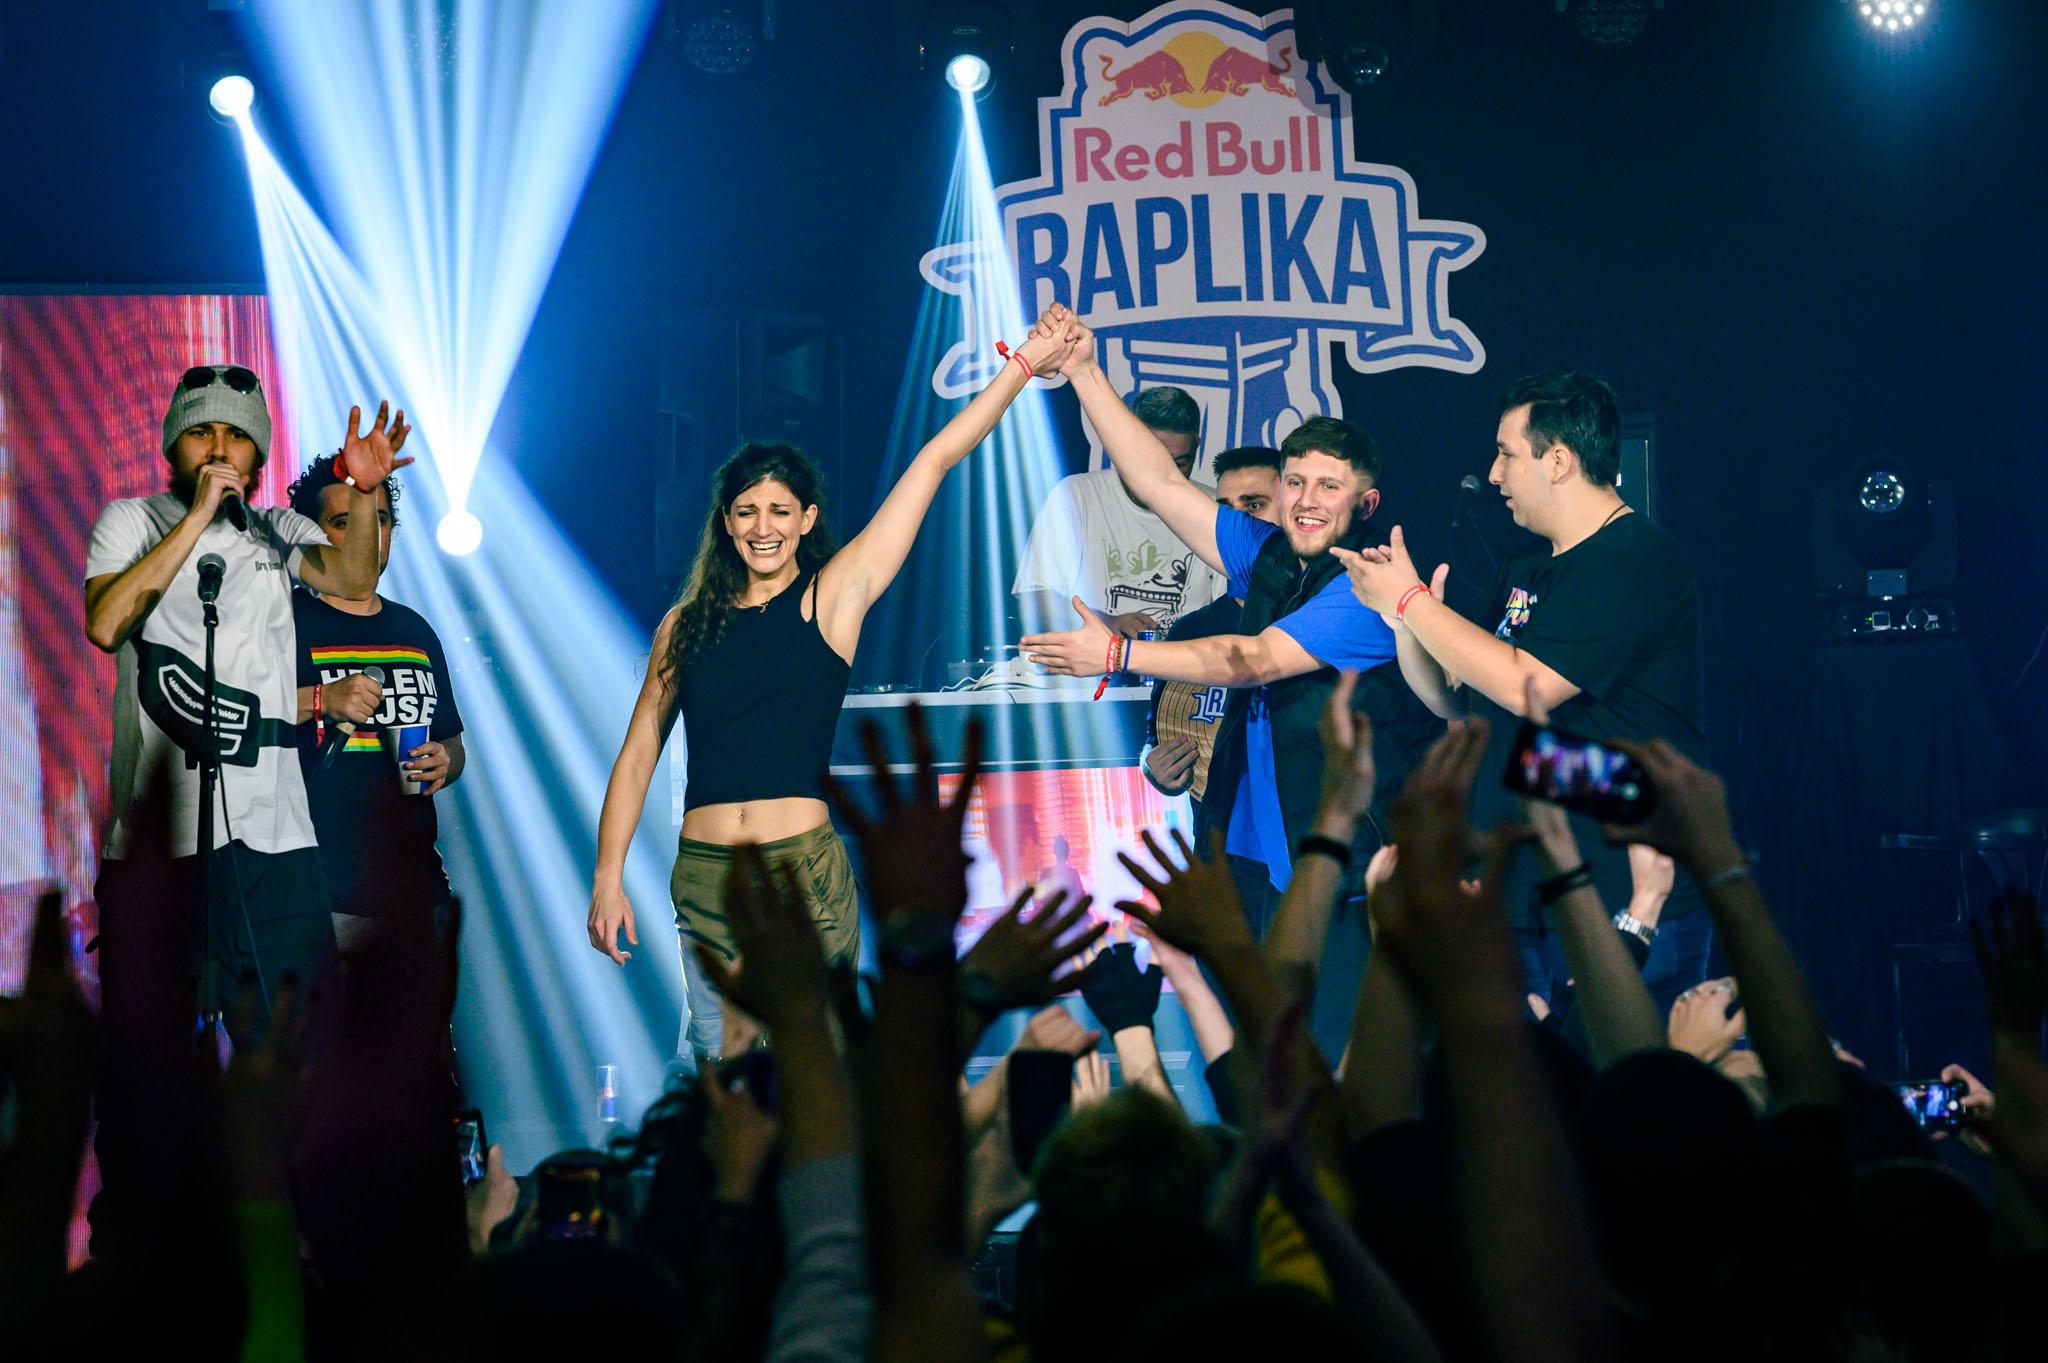 "Red Bull RapLika" održana u kinu "Bosna" - Avaz